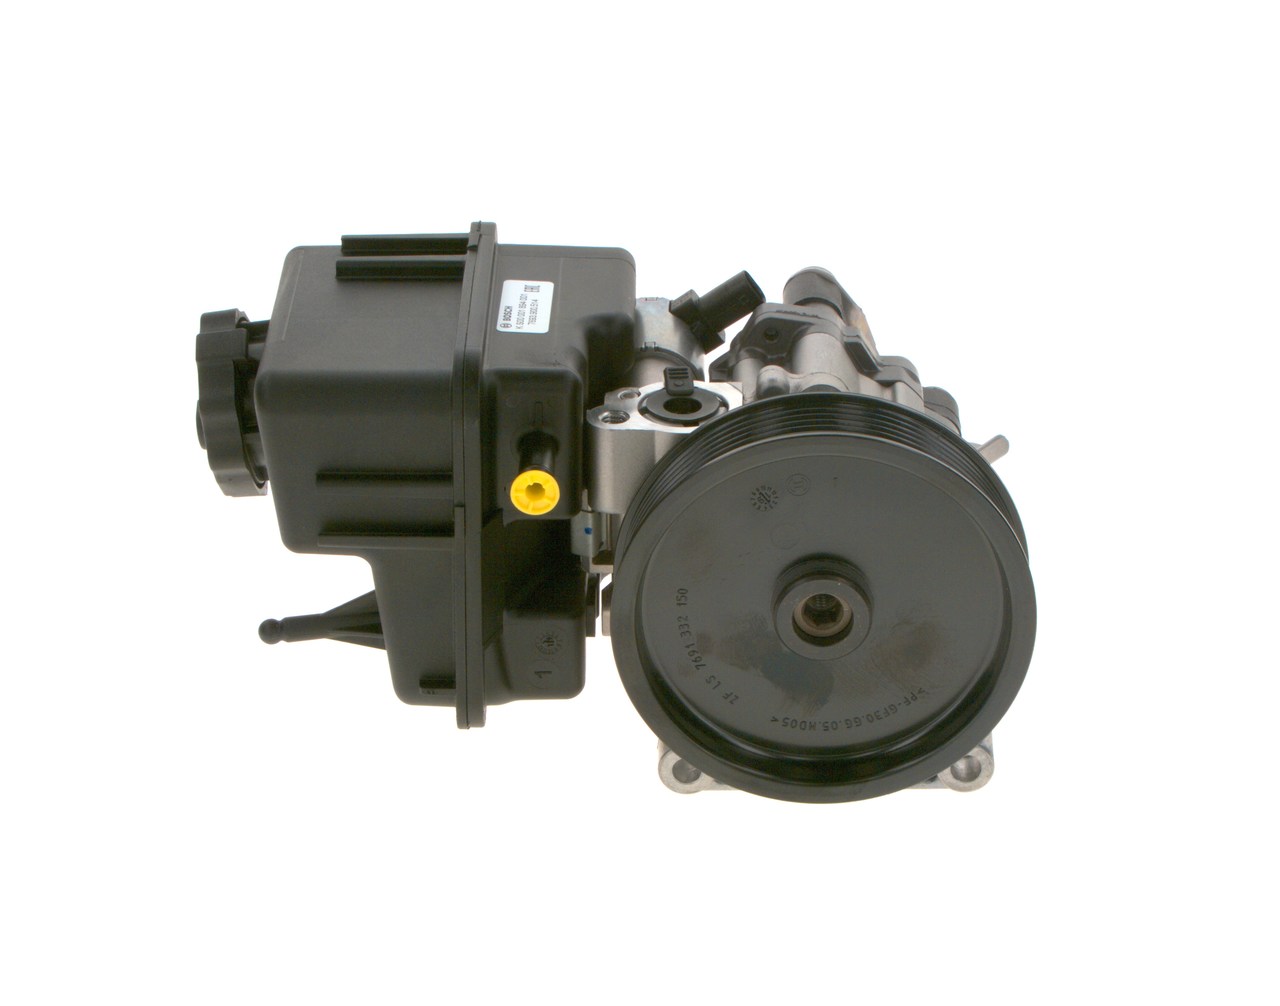 BOSCH K S01 001 726 Power steering pump Hydraulic, Pressure-limiting Valve, Vane Pump, Clockwise rotation